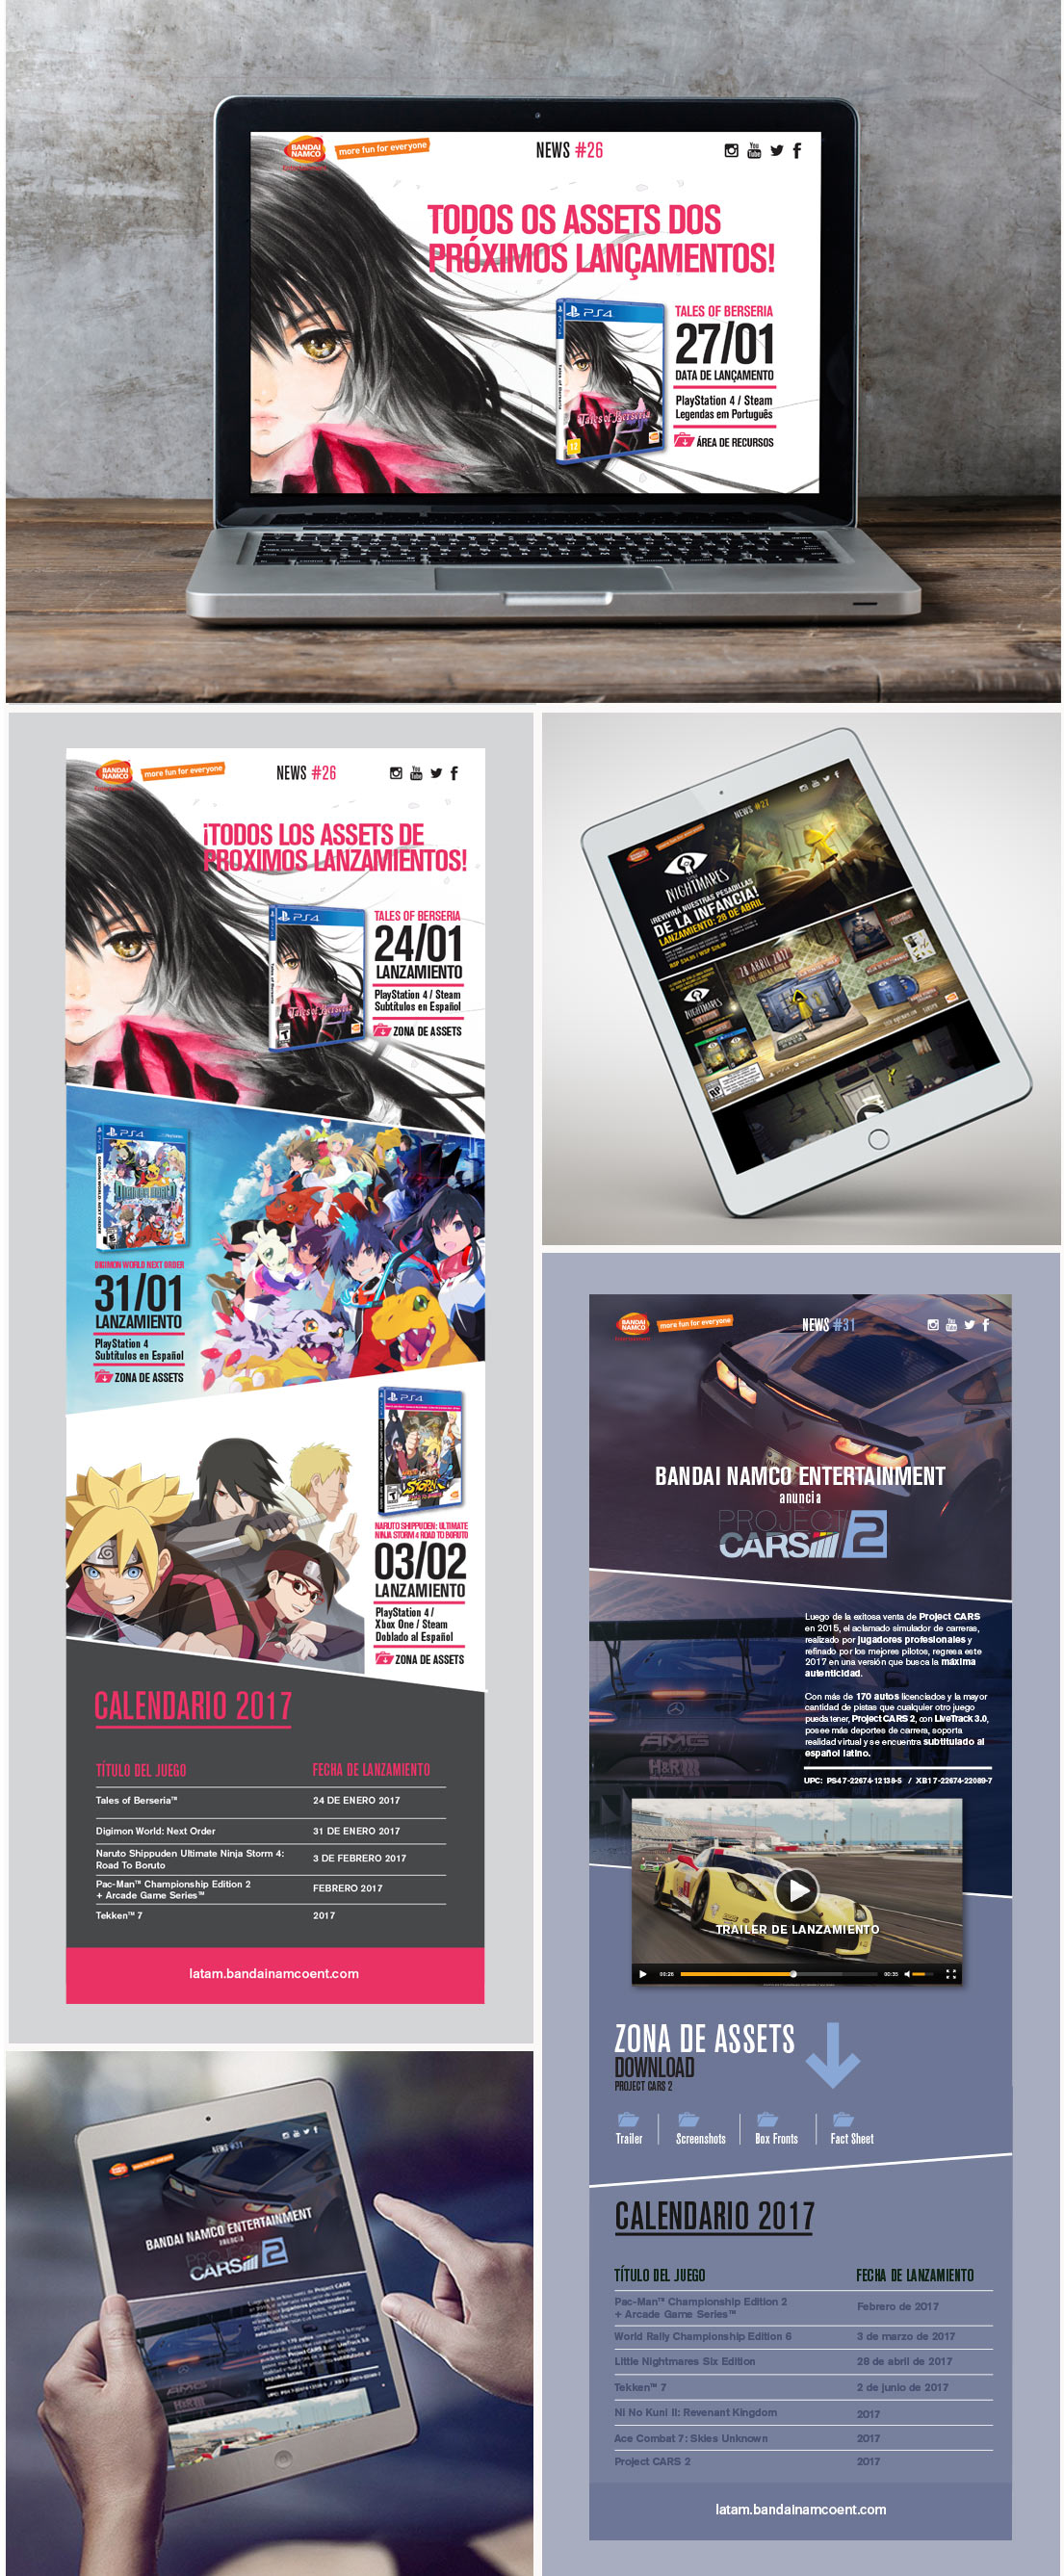 Bandai Namco E-Mail marketing